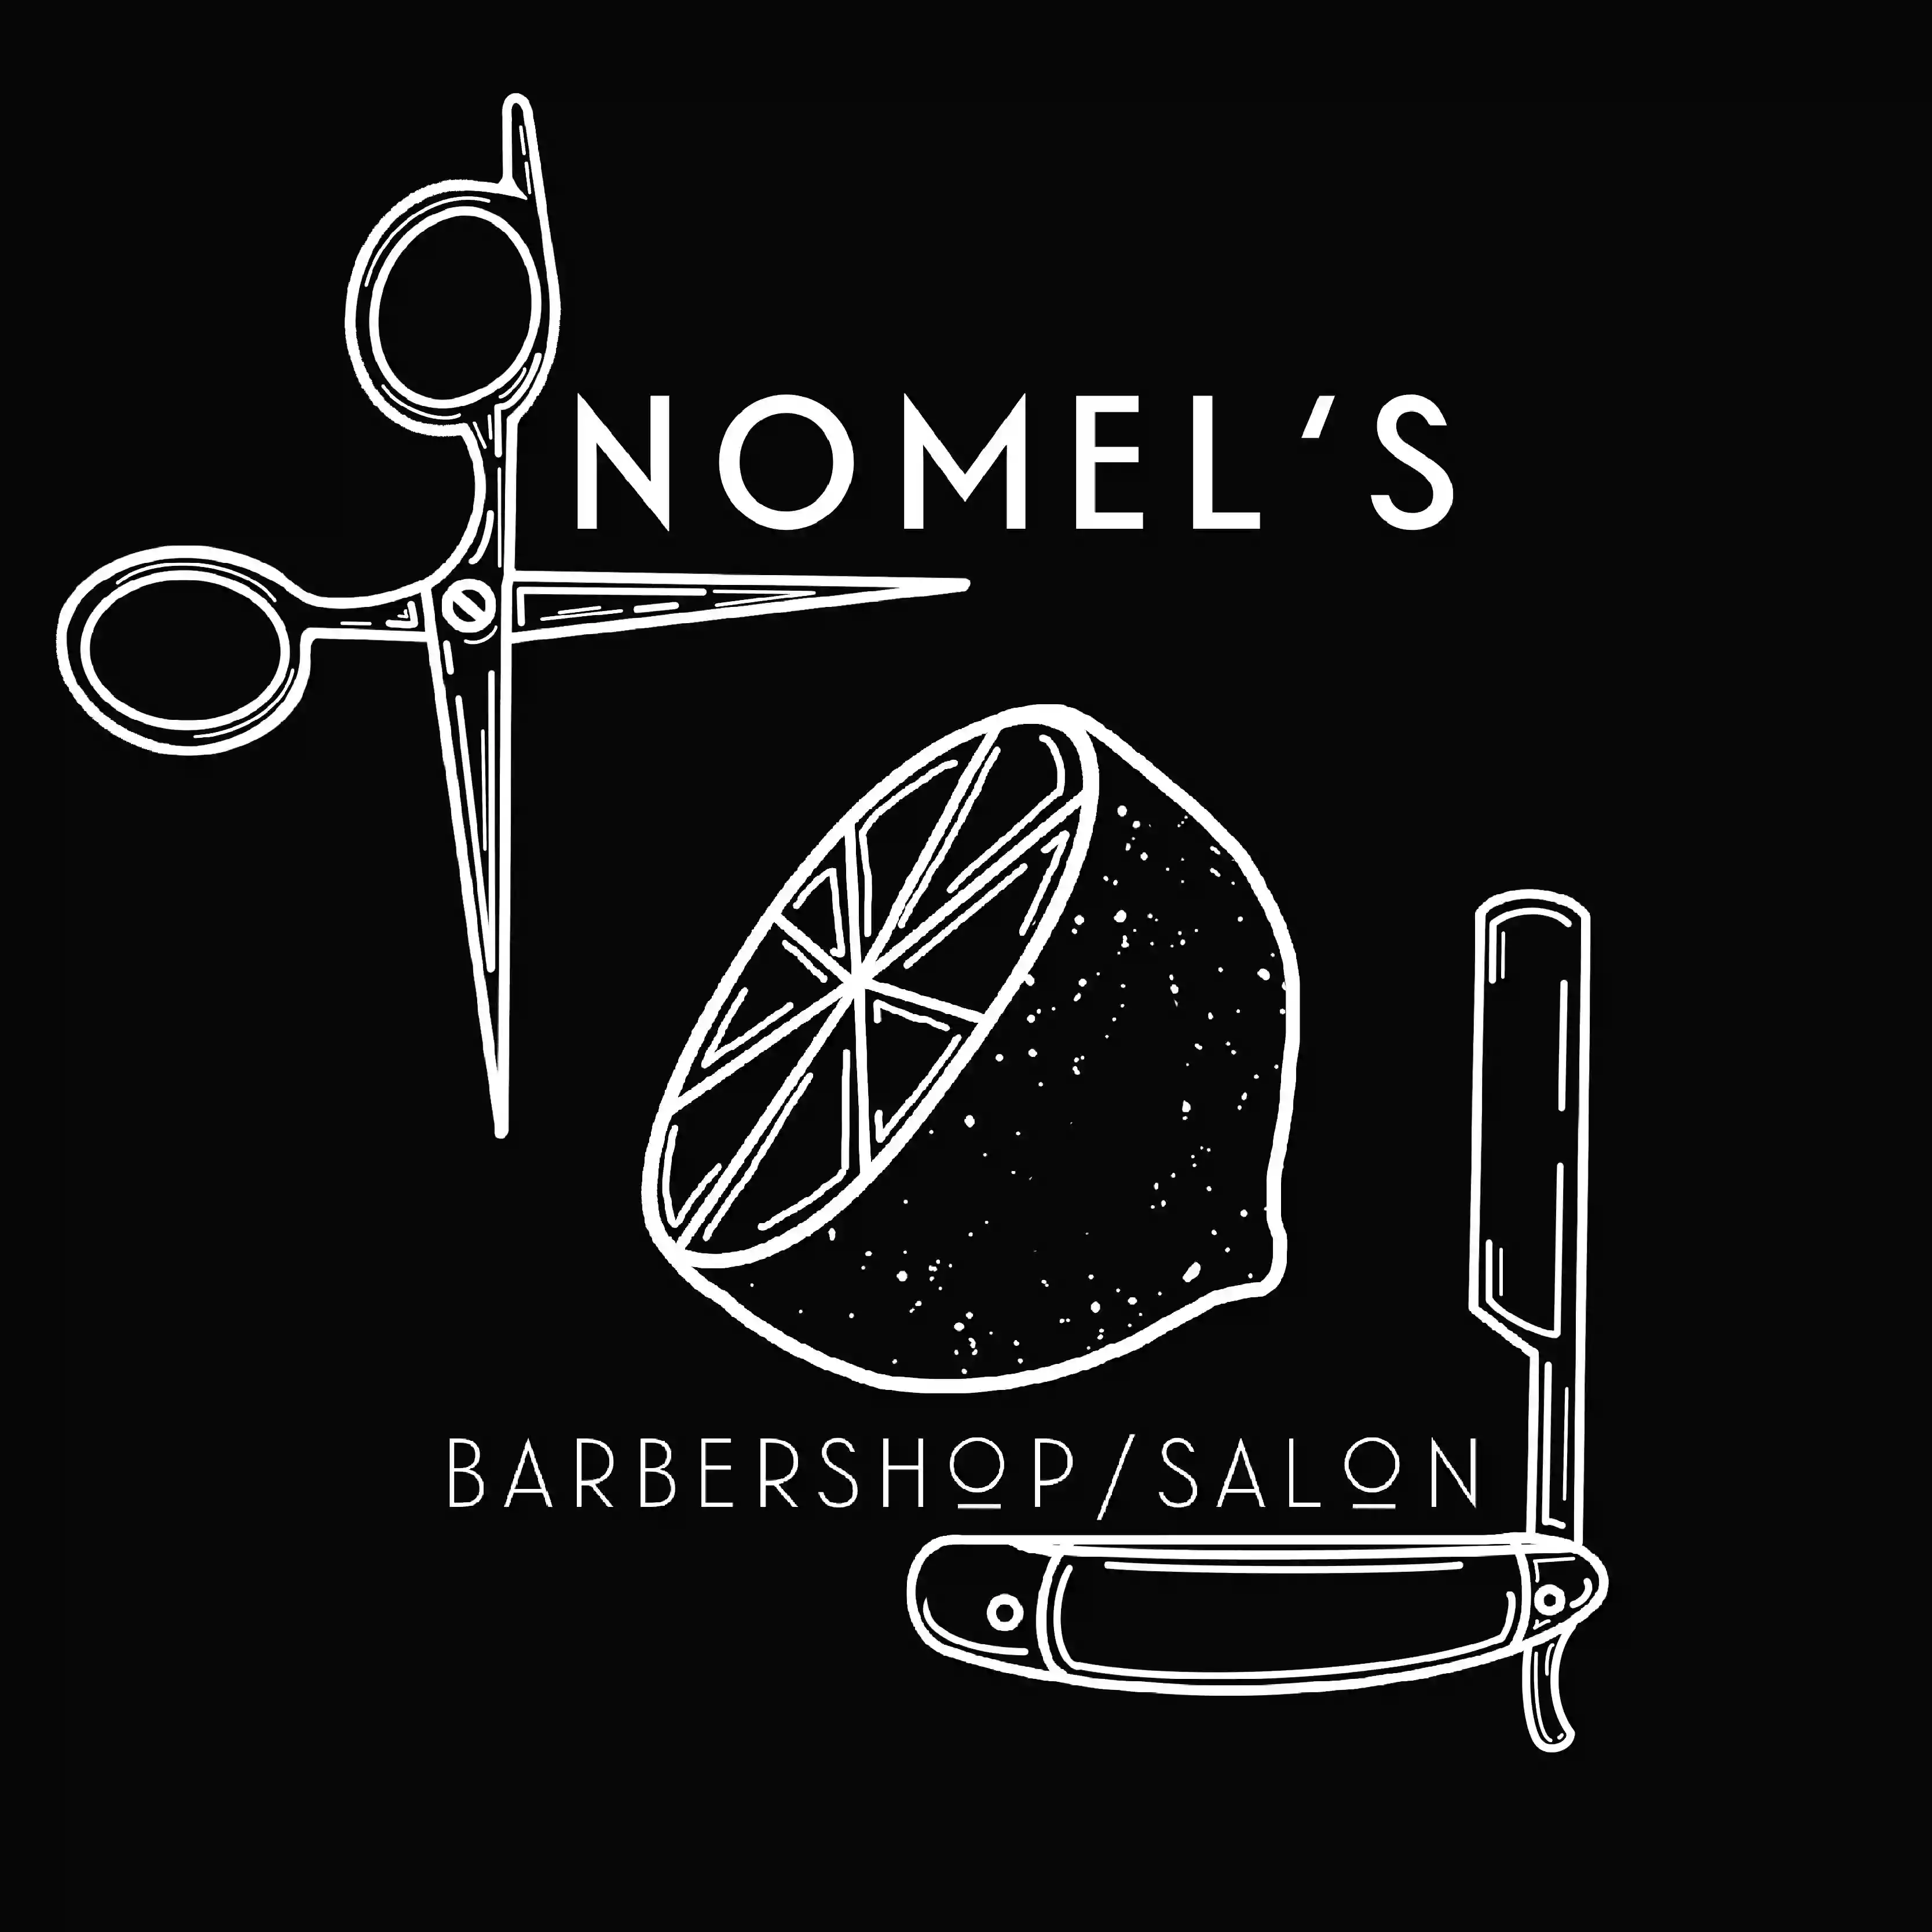 Nomels barber shop/ salon